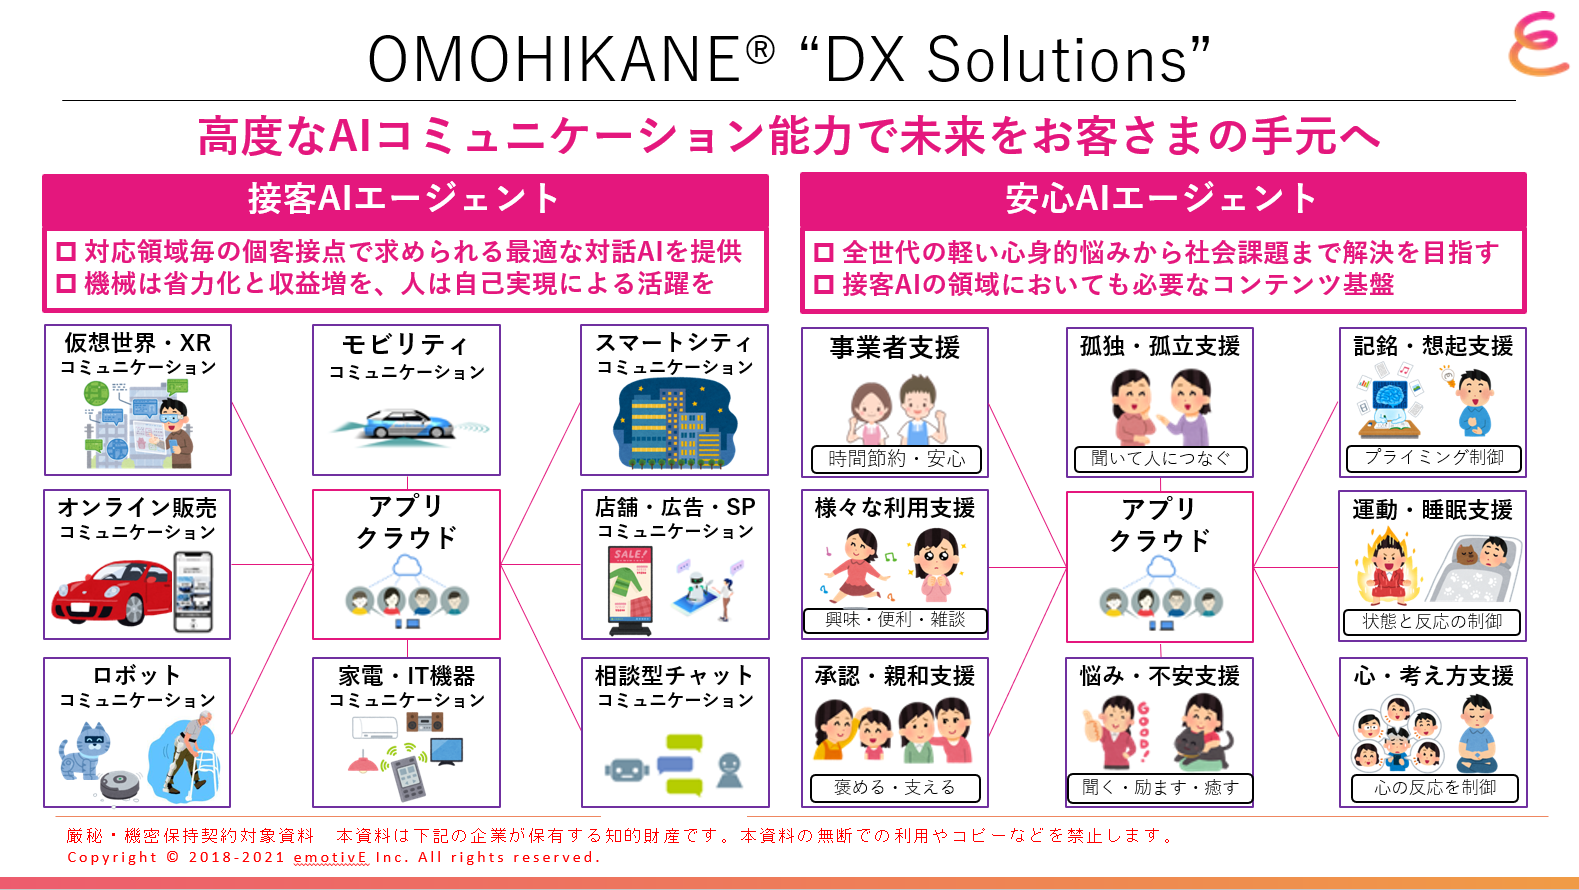 OMOHIKANE DX solutions